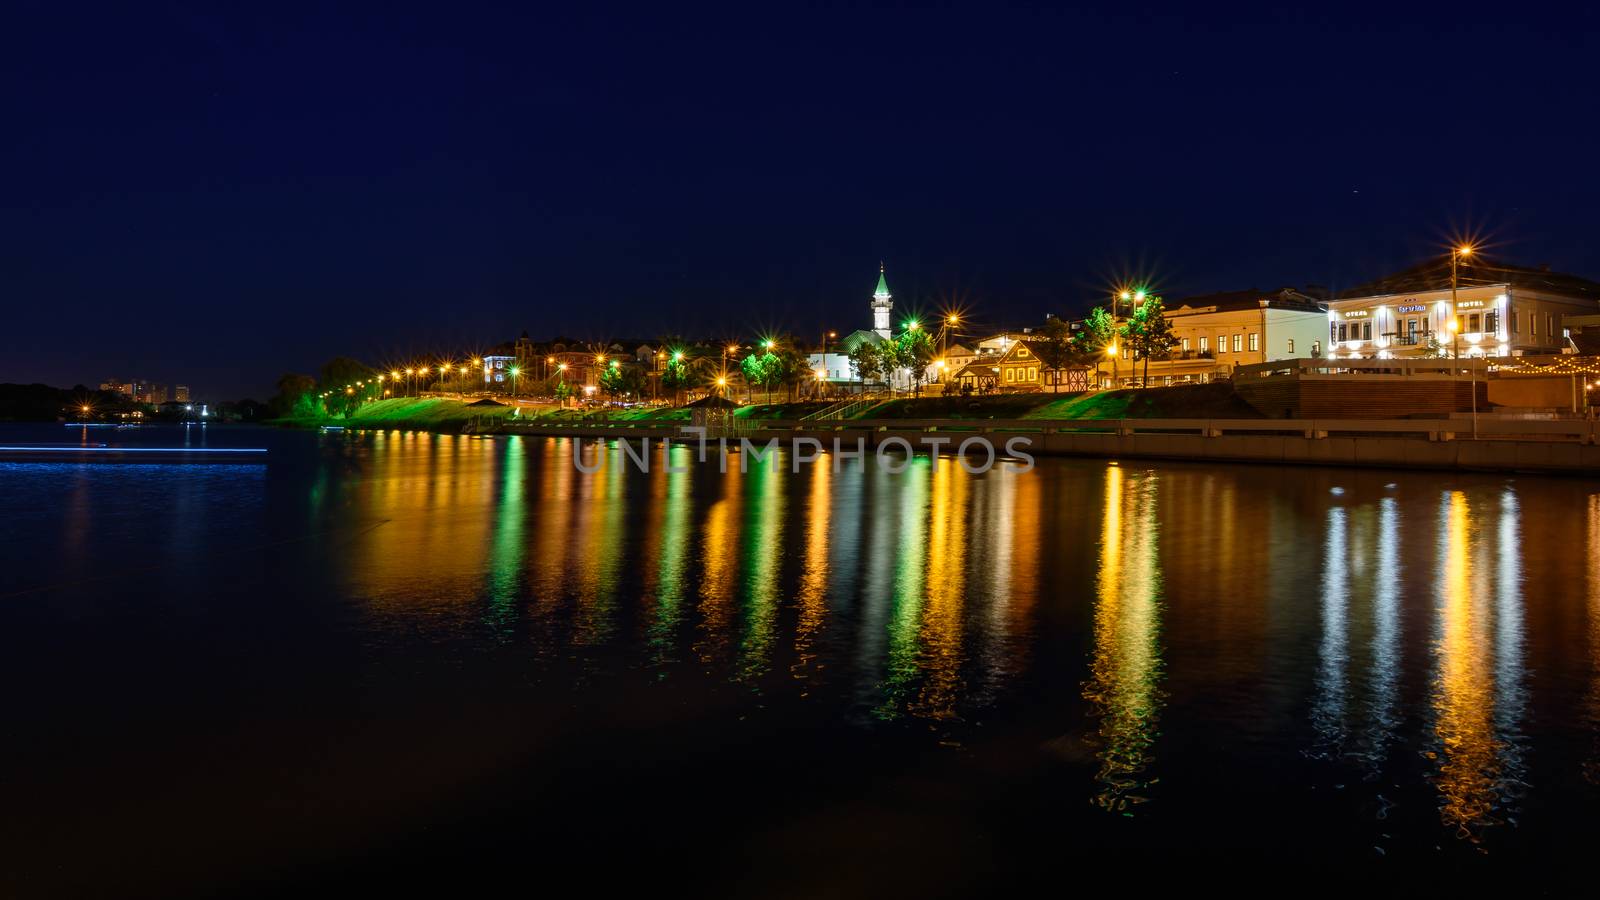 The city of Kazan during a beautiful summer night. by Seva_blsv